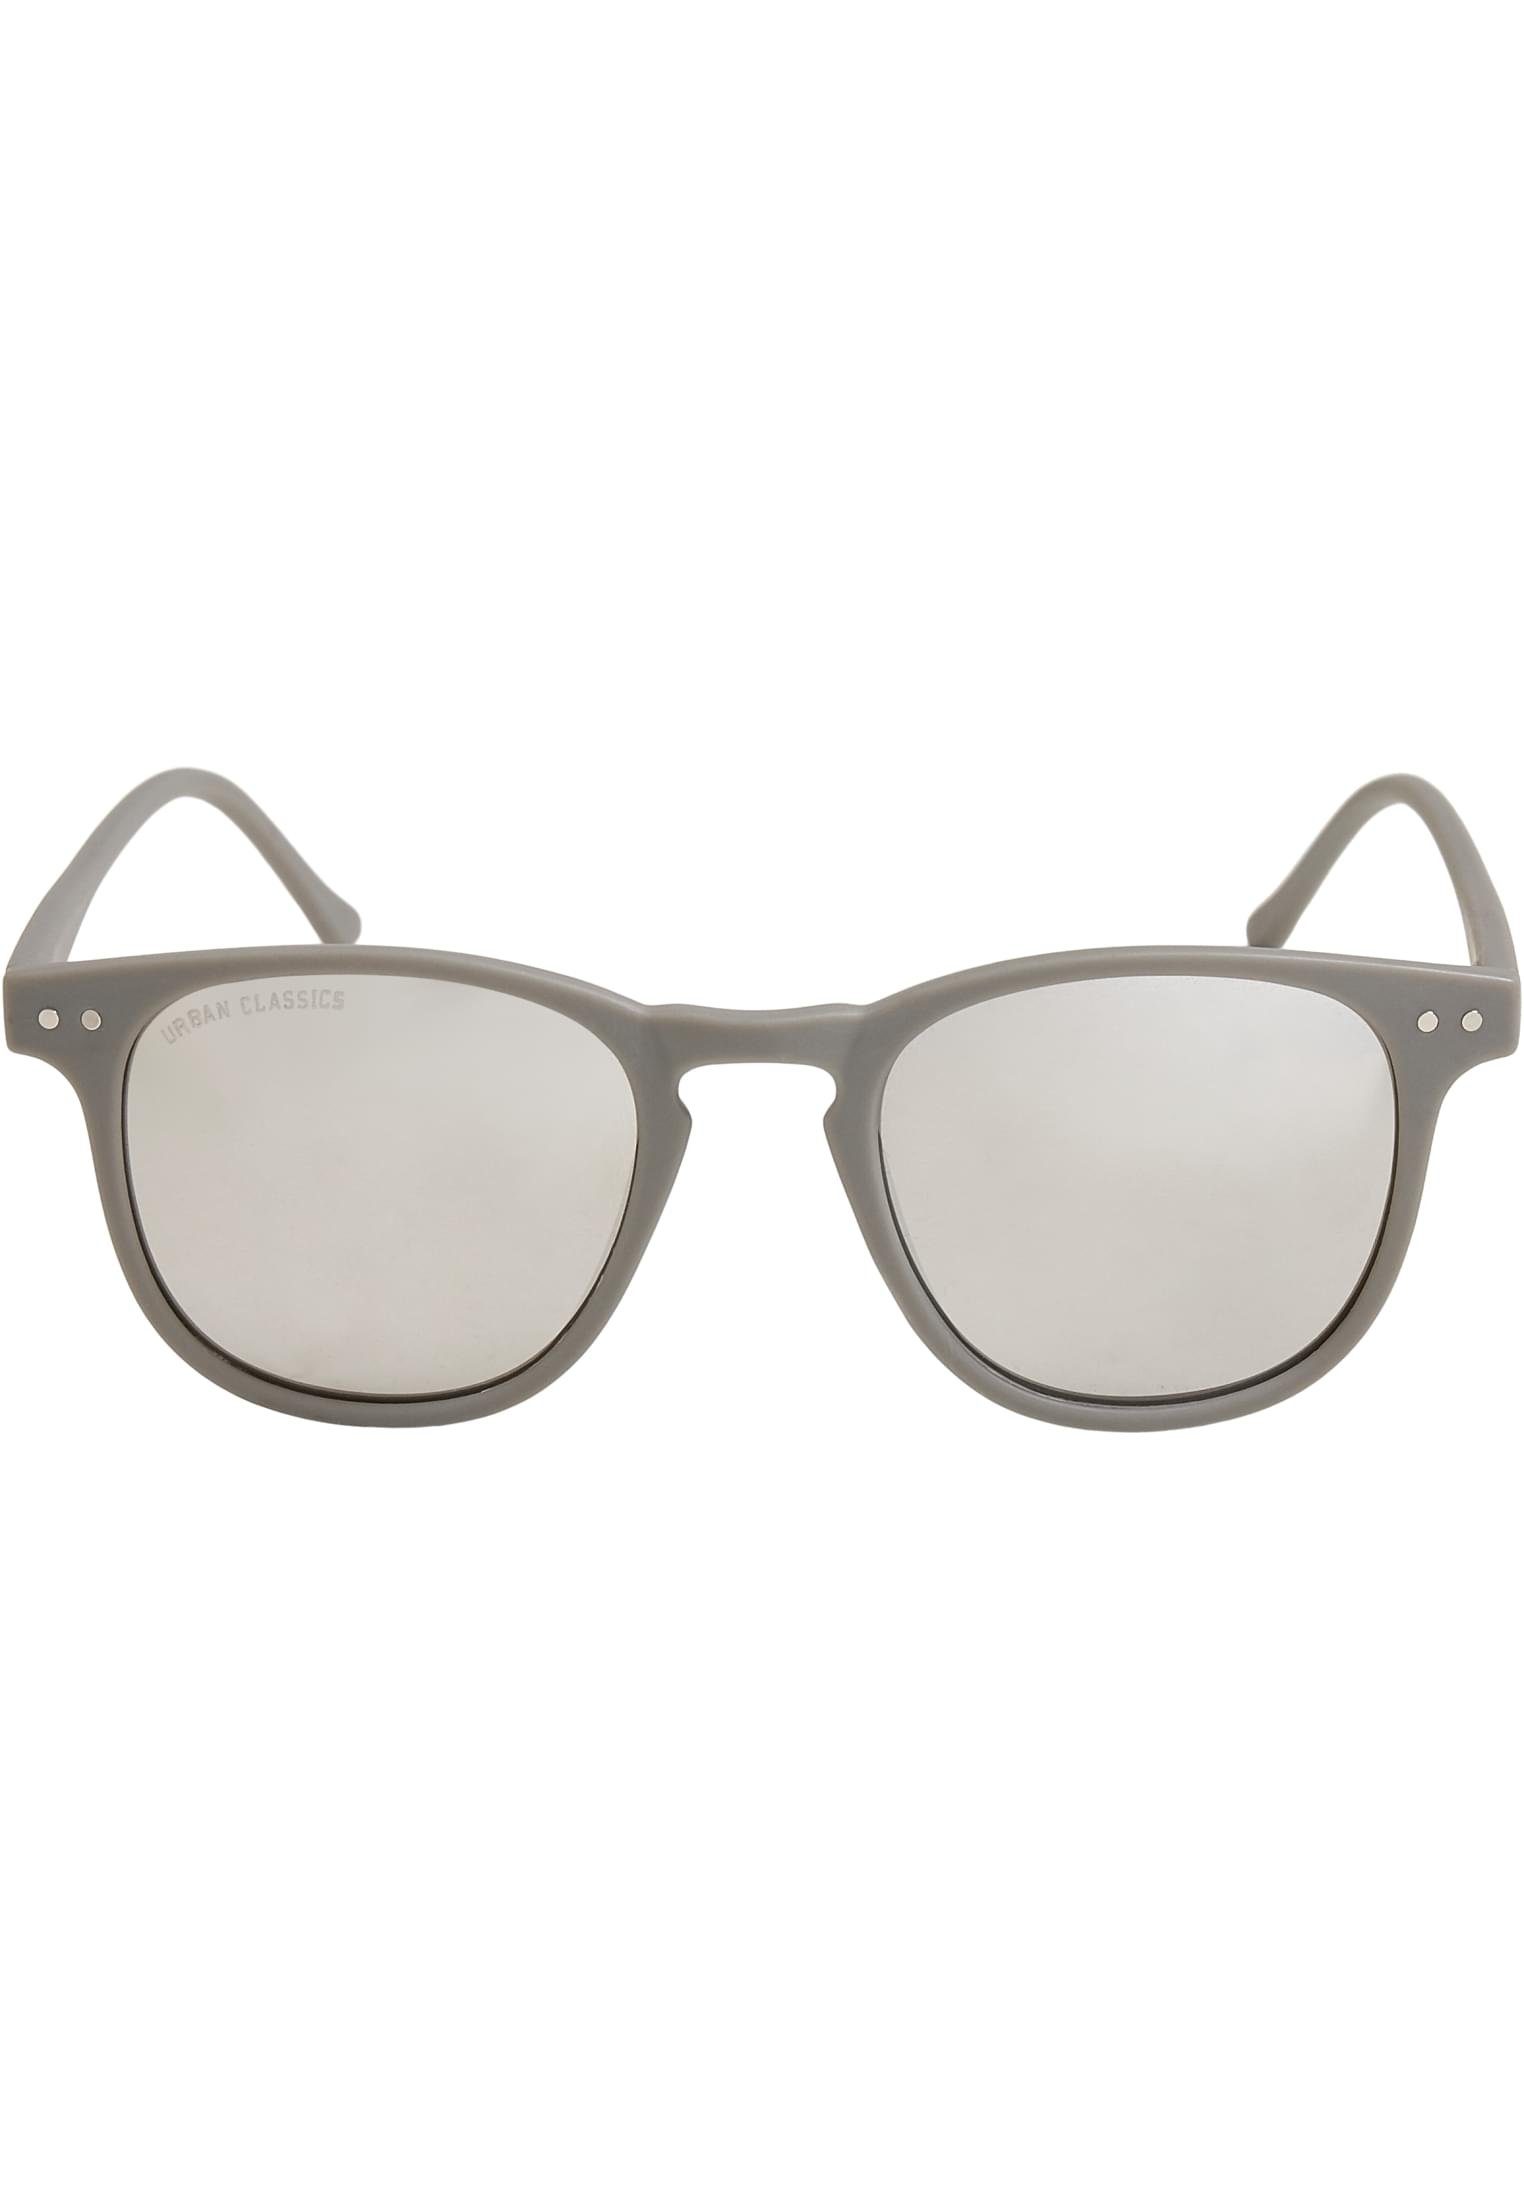 Chain Unisex with grey/silver URBAN CLASSICS Sunglasses Arthur Sonnenbrille